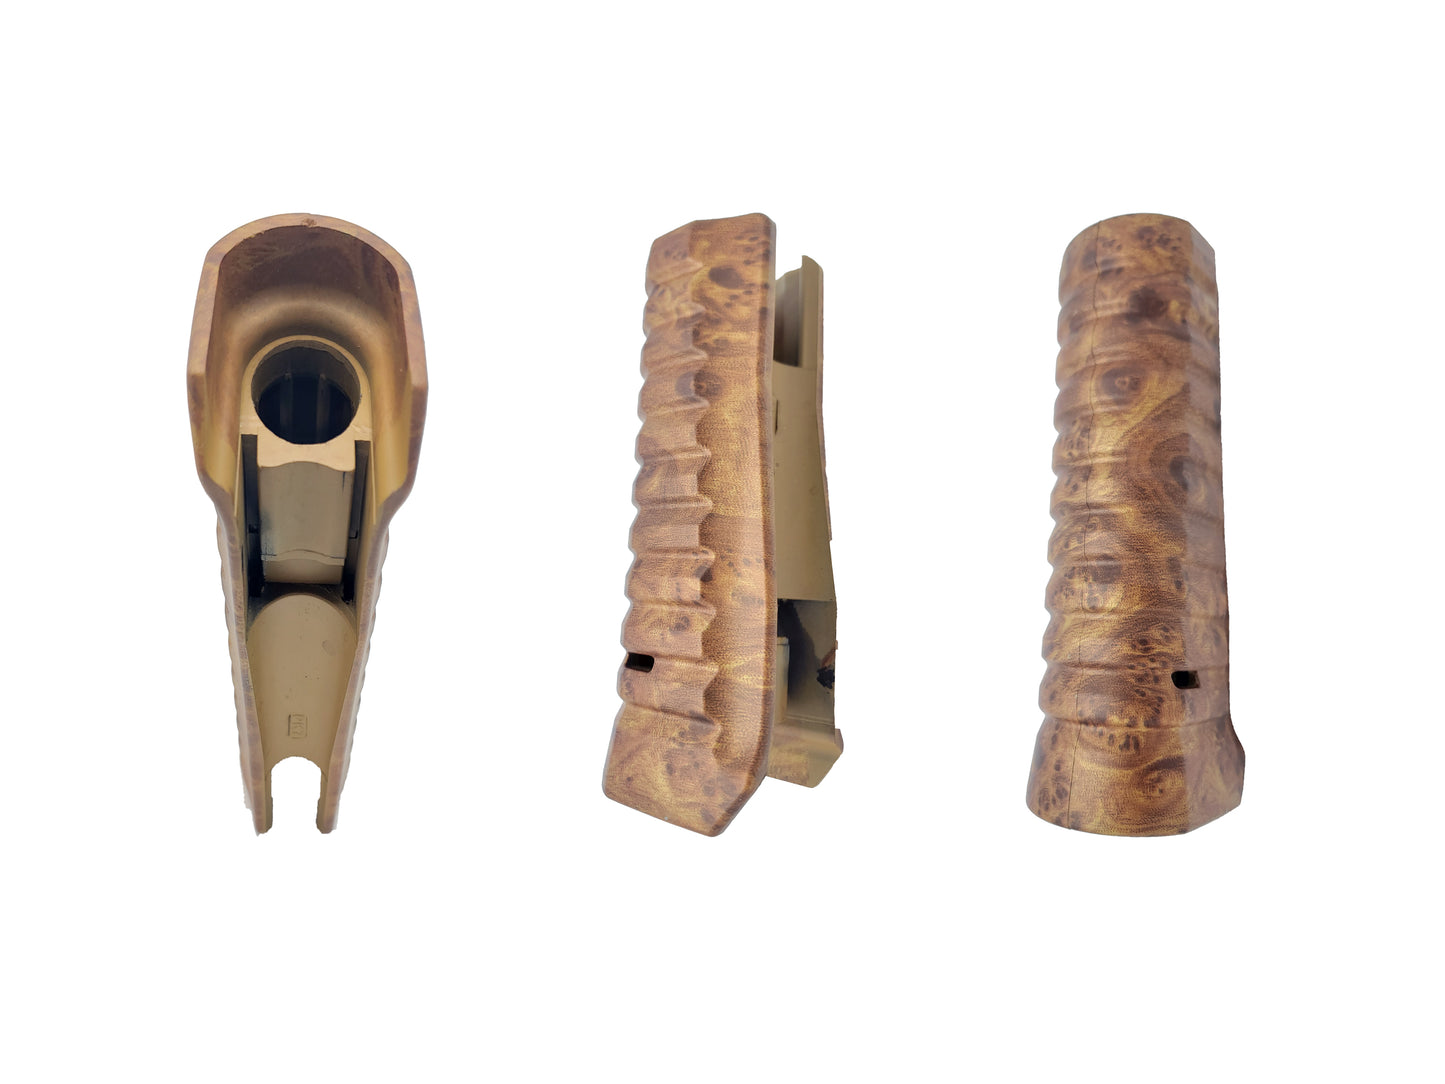 Winchester SXP Defender Pump-Action Shotgun | Raptor Birds Head Furniture Kit, FOREND & GRIP Wooden Effect | Coated